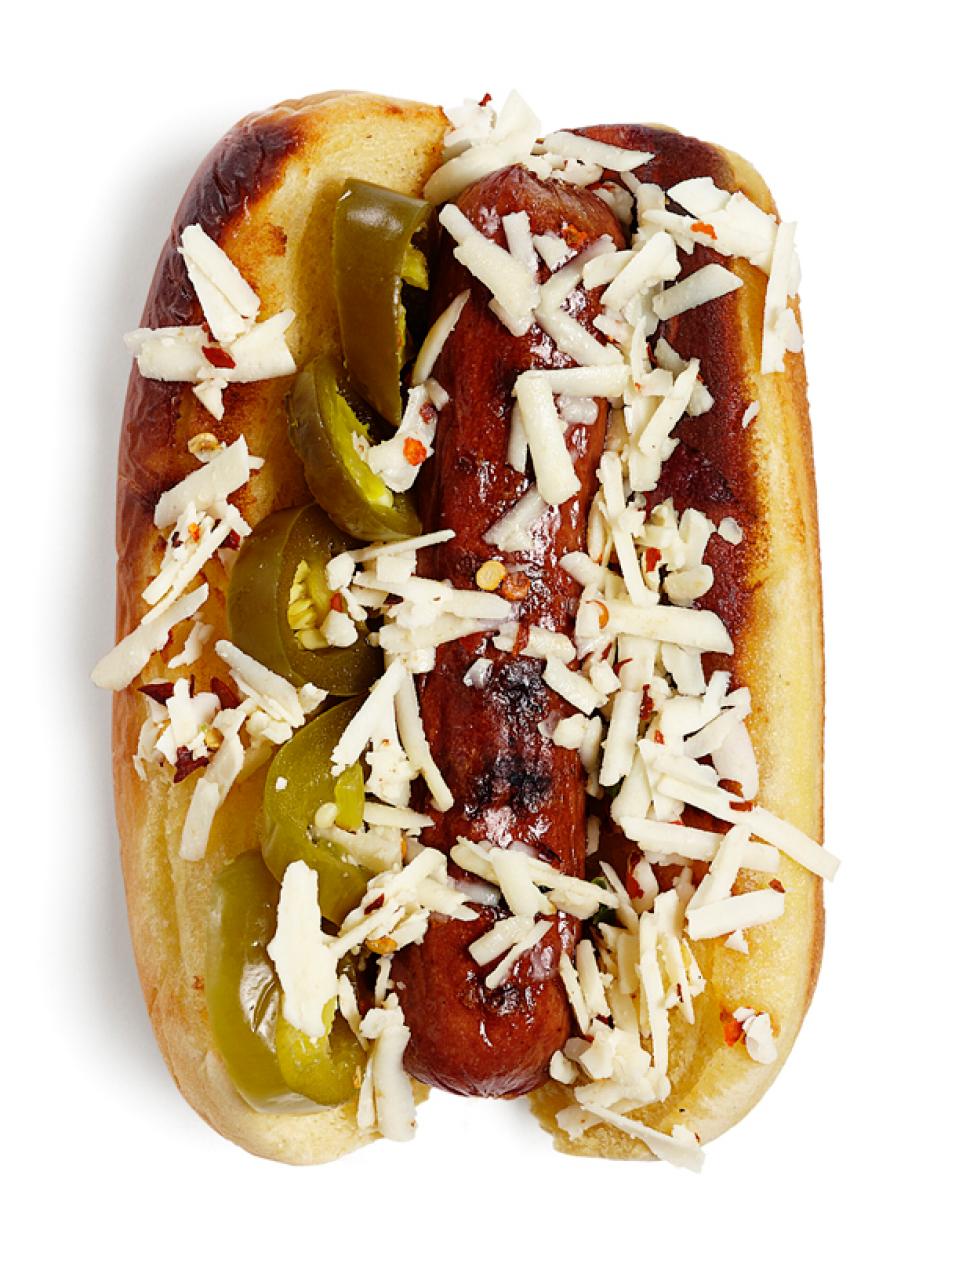 Easy Hot Dog Topping Ideas : Food Network | Hamburger and Hot Dog